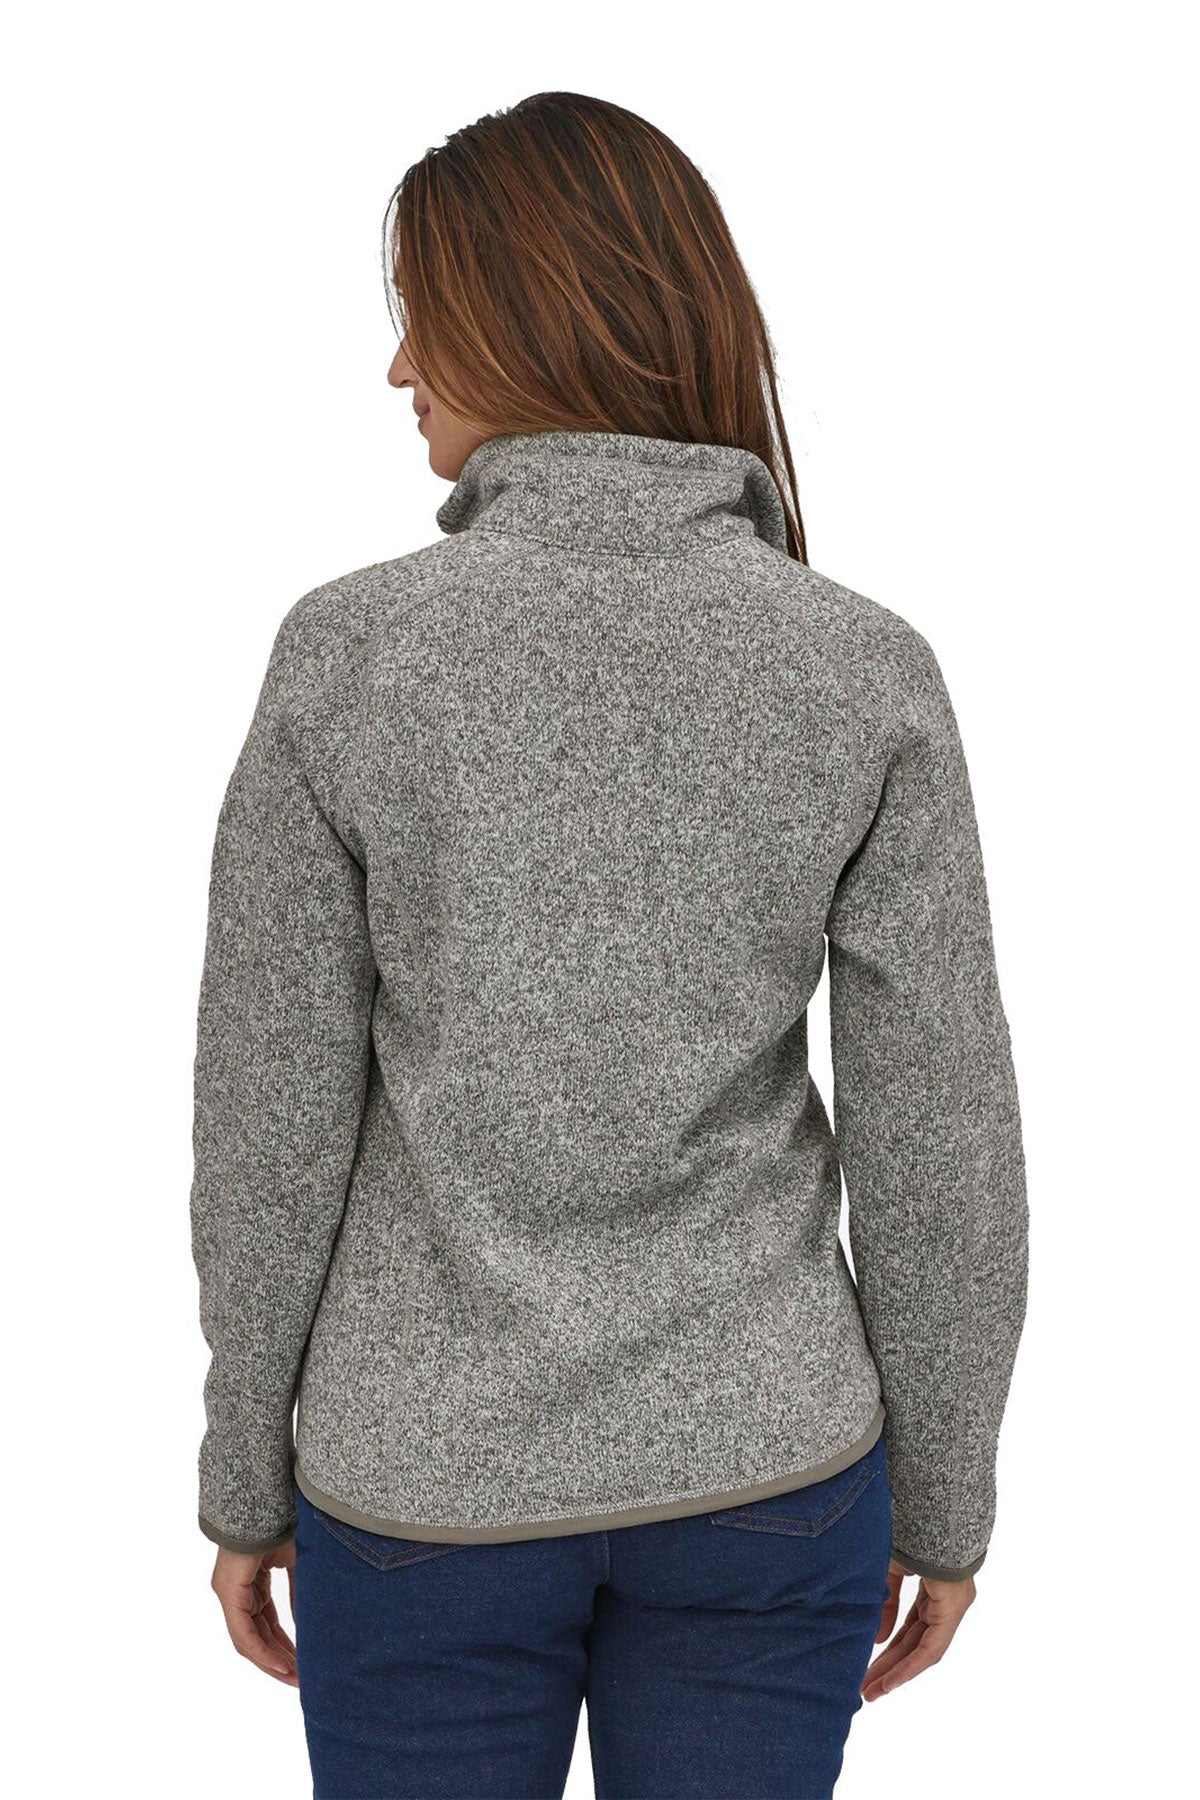 Patagonia Women's Better Sweater Quarter Zip in Birch White